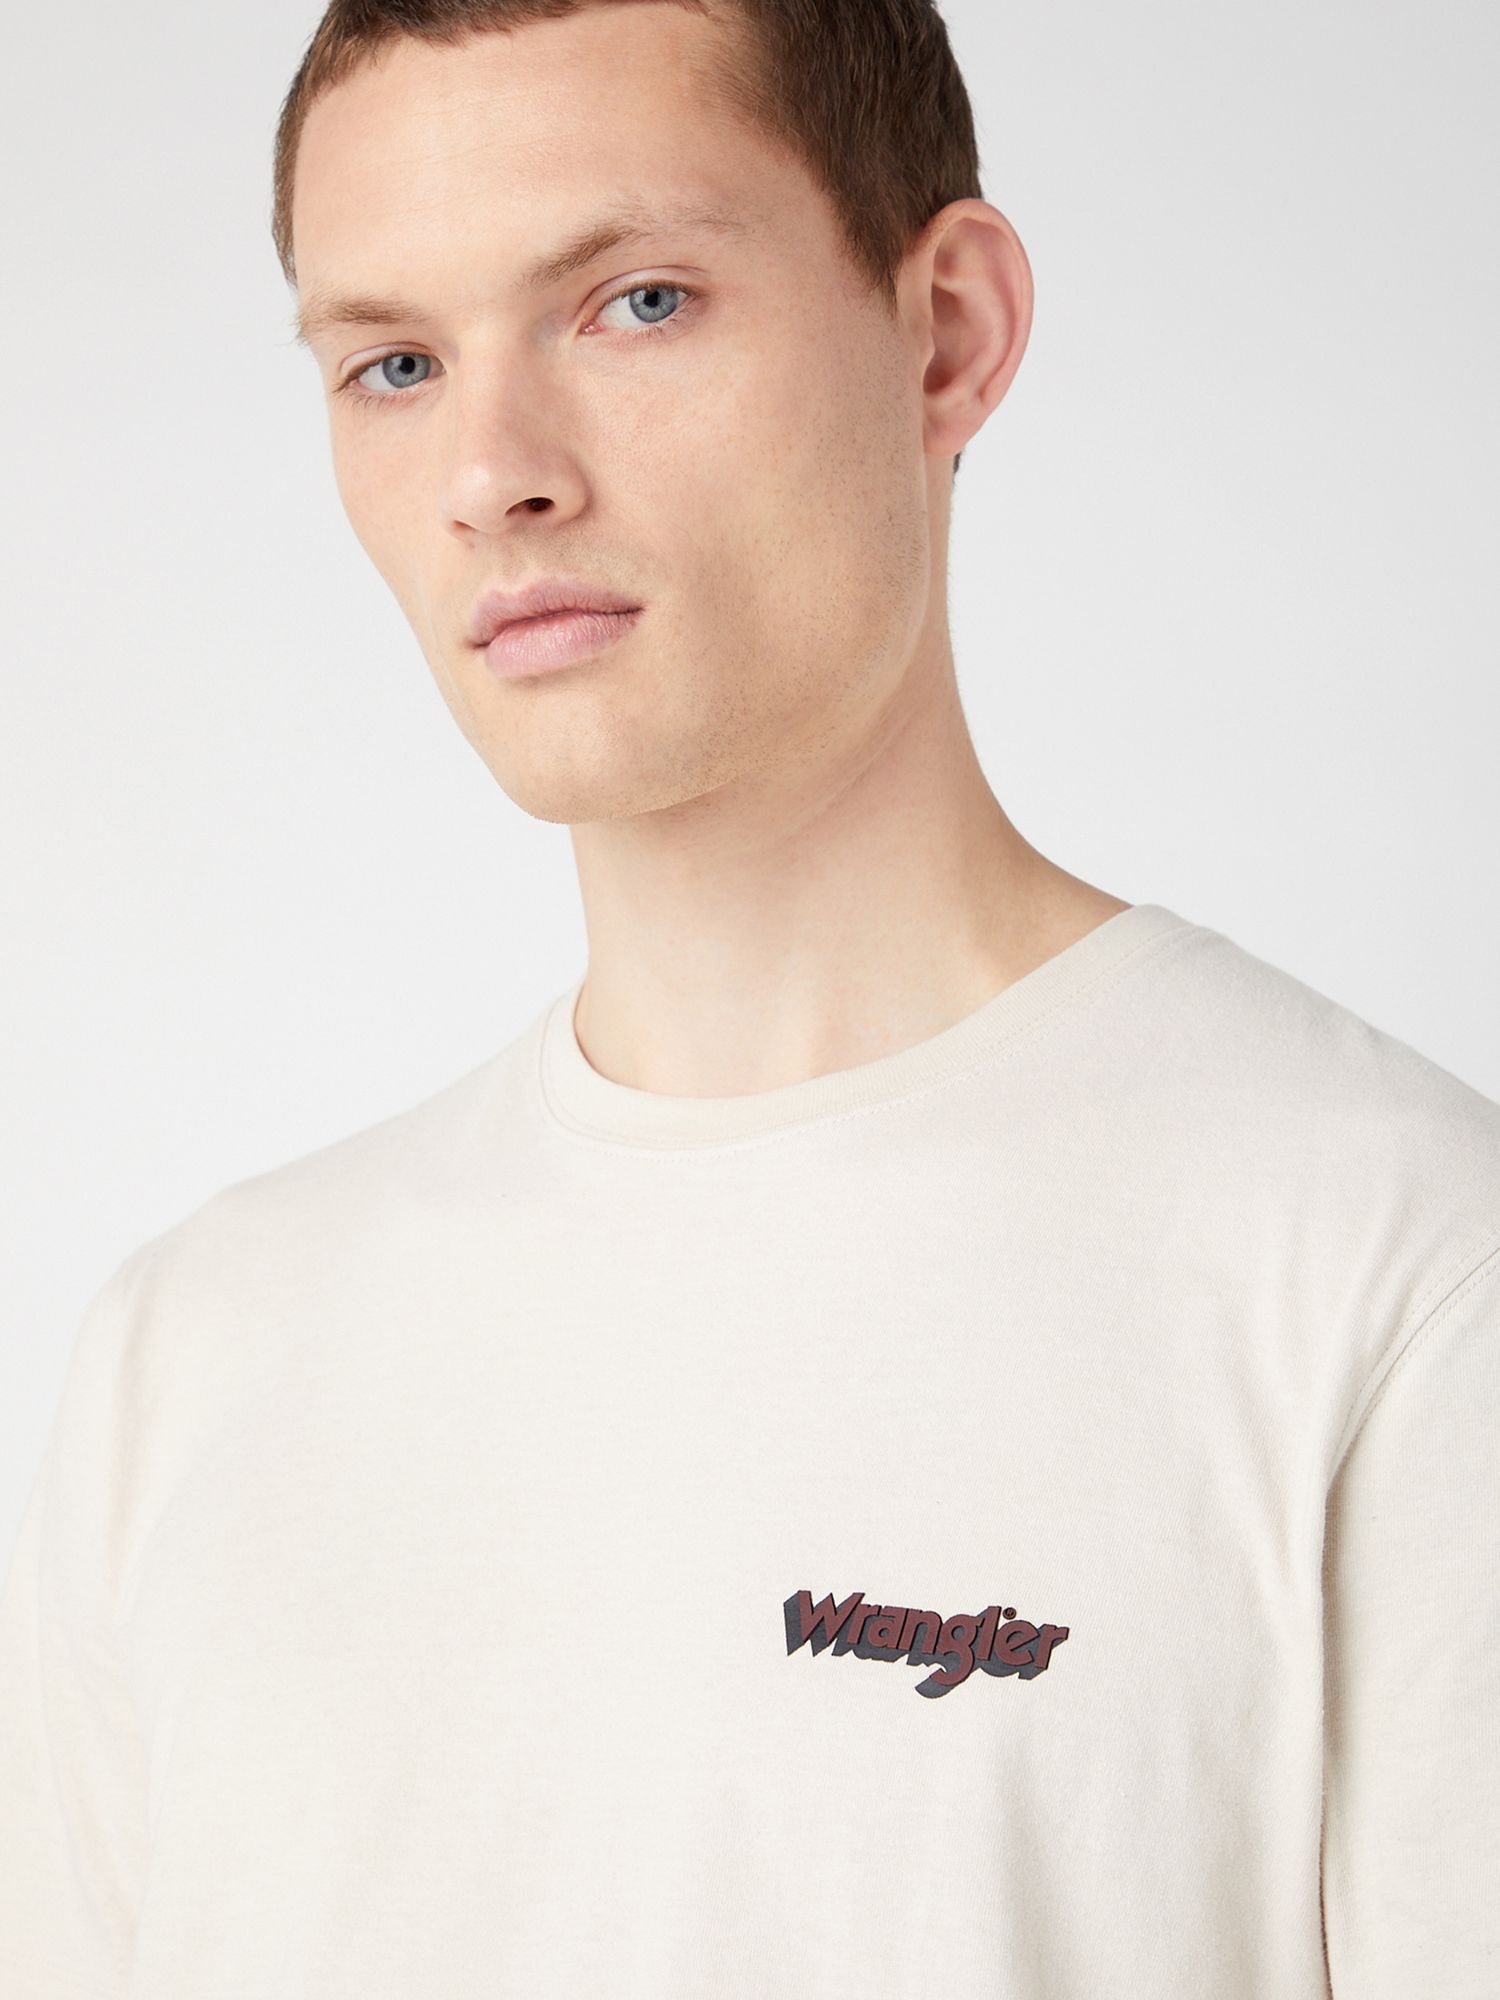 Wrangler Short Sleeve Logo T-Shirt, Rainy Day, M